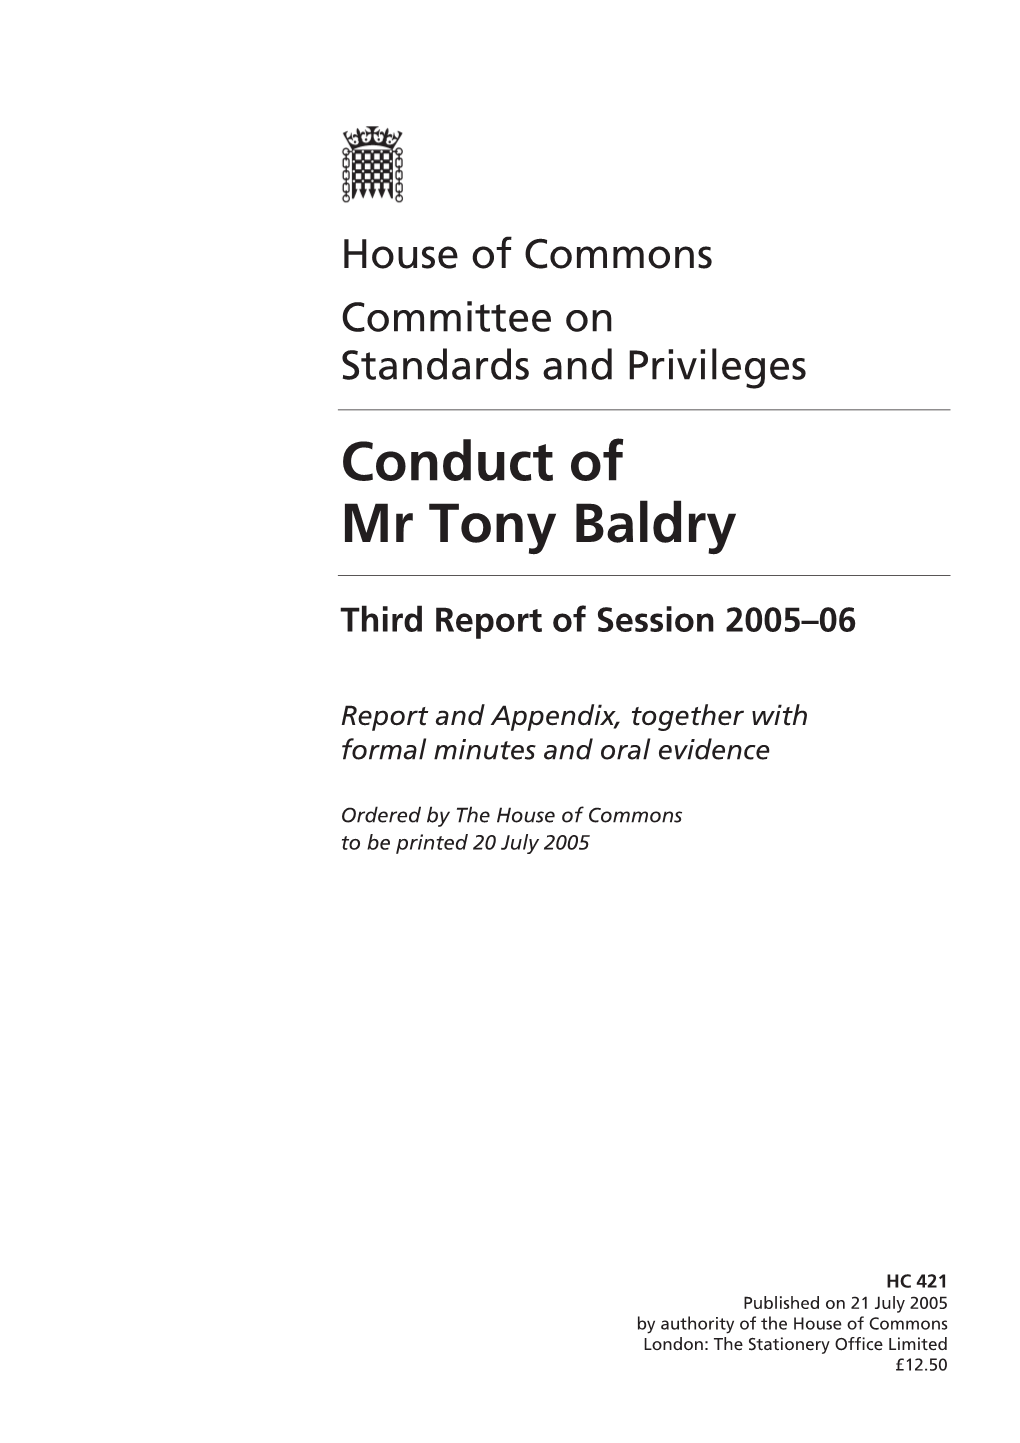 Conduct of Mr Tony Baldry